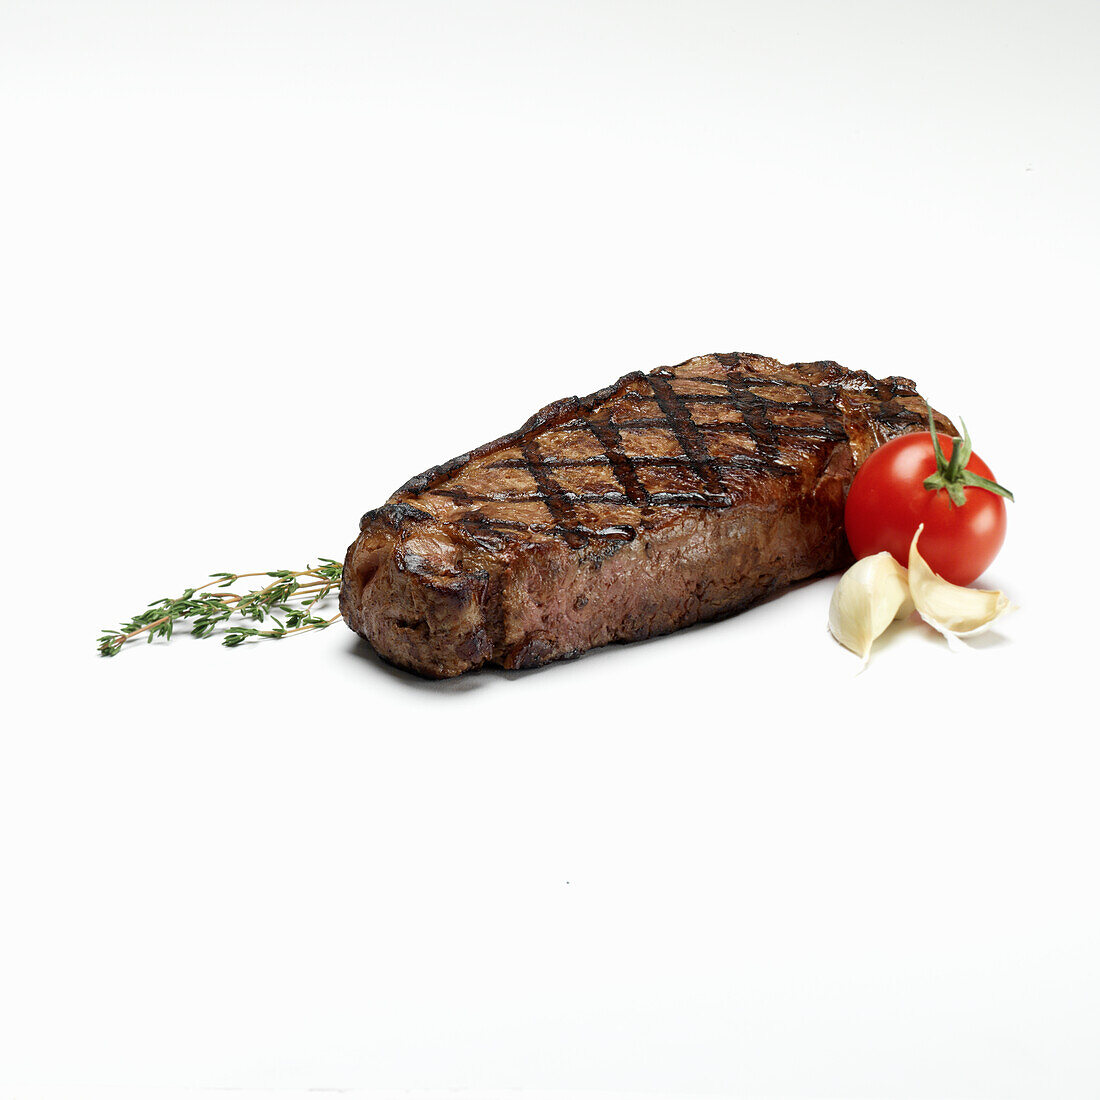 A grilled rib eye steak